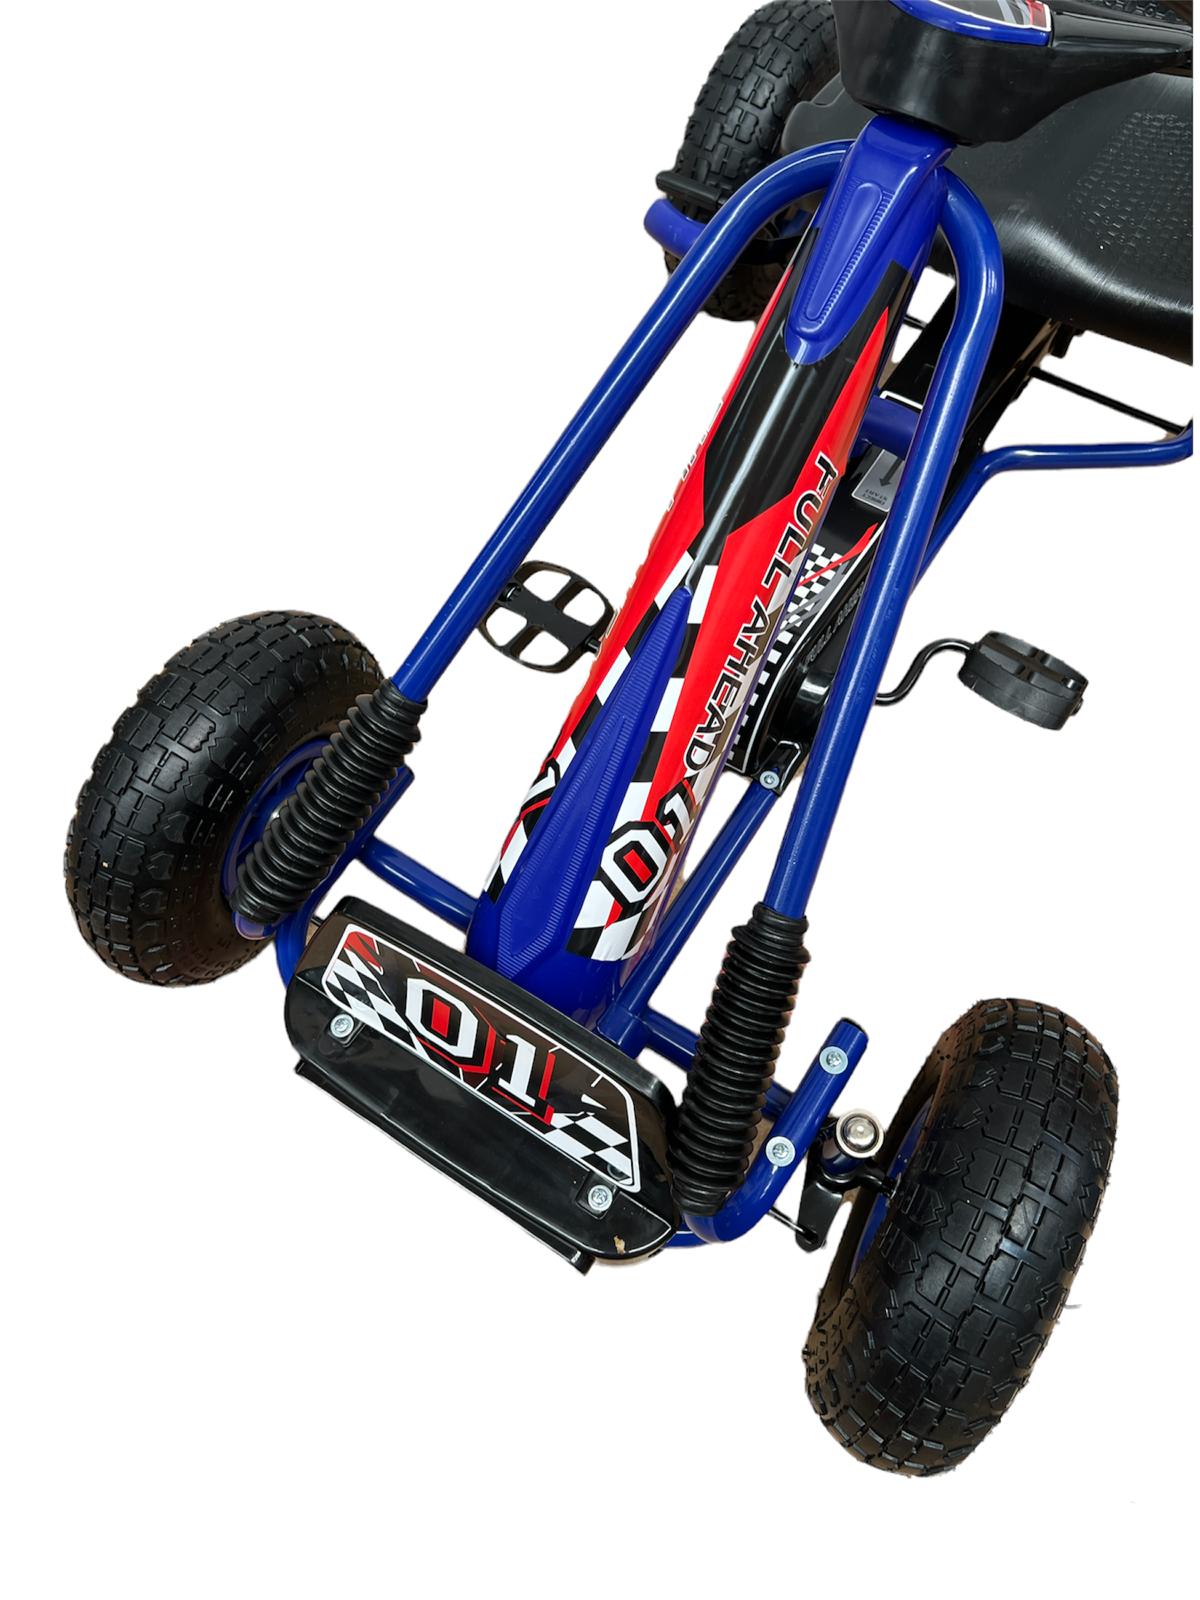 Kart little racer A15 metalic cu roti din cauciuc goflabile,pedale si frana pe spate,3-9 ani